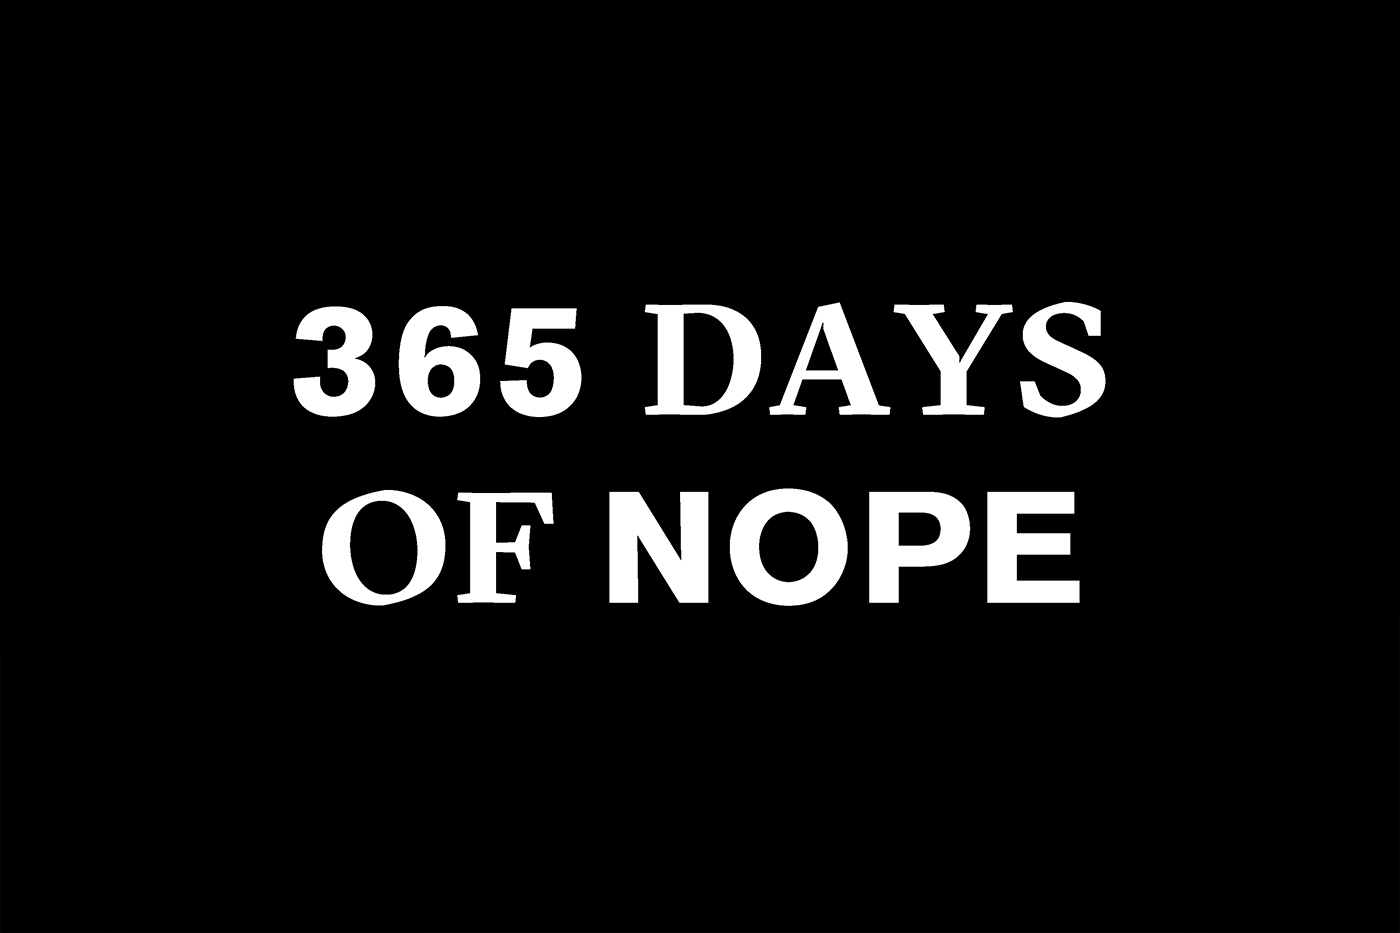 365 DAYS OF NOPE